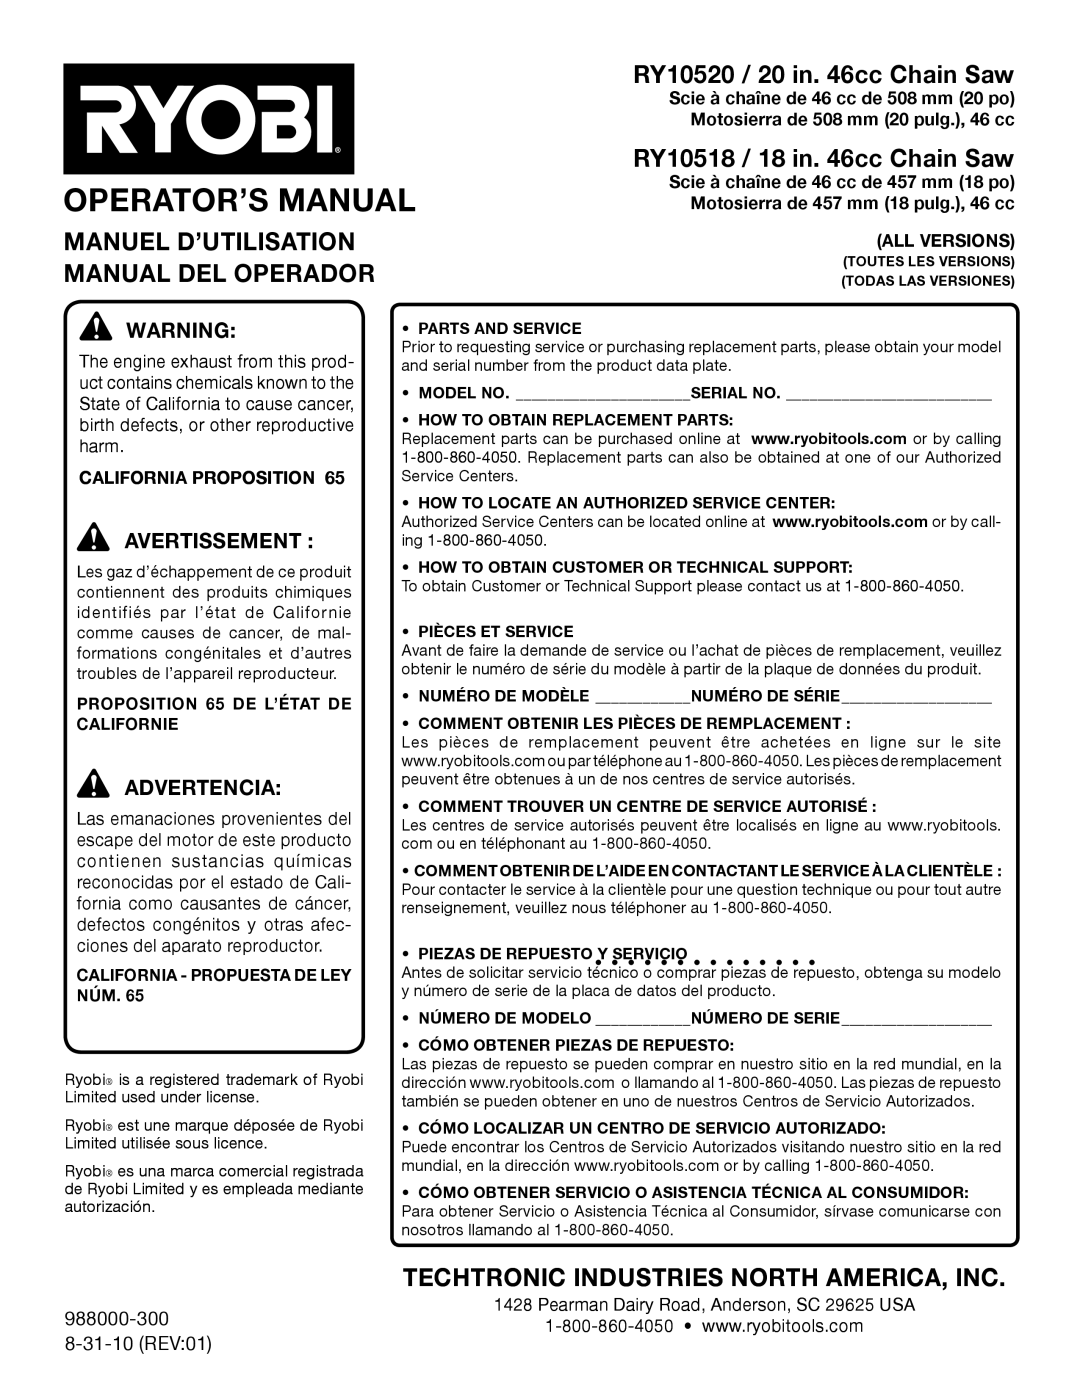 Ryobi Operator’S Manual, RY10520 / 20 in. 46cc Chain Saw, RY10518 / 18 in. 46cc Chain Saw, Manuel D’Utilisation 